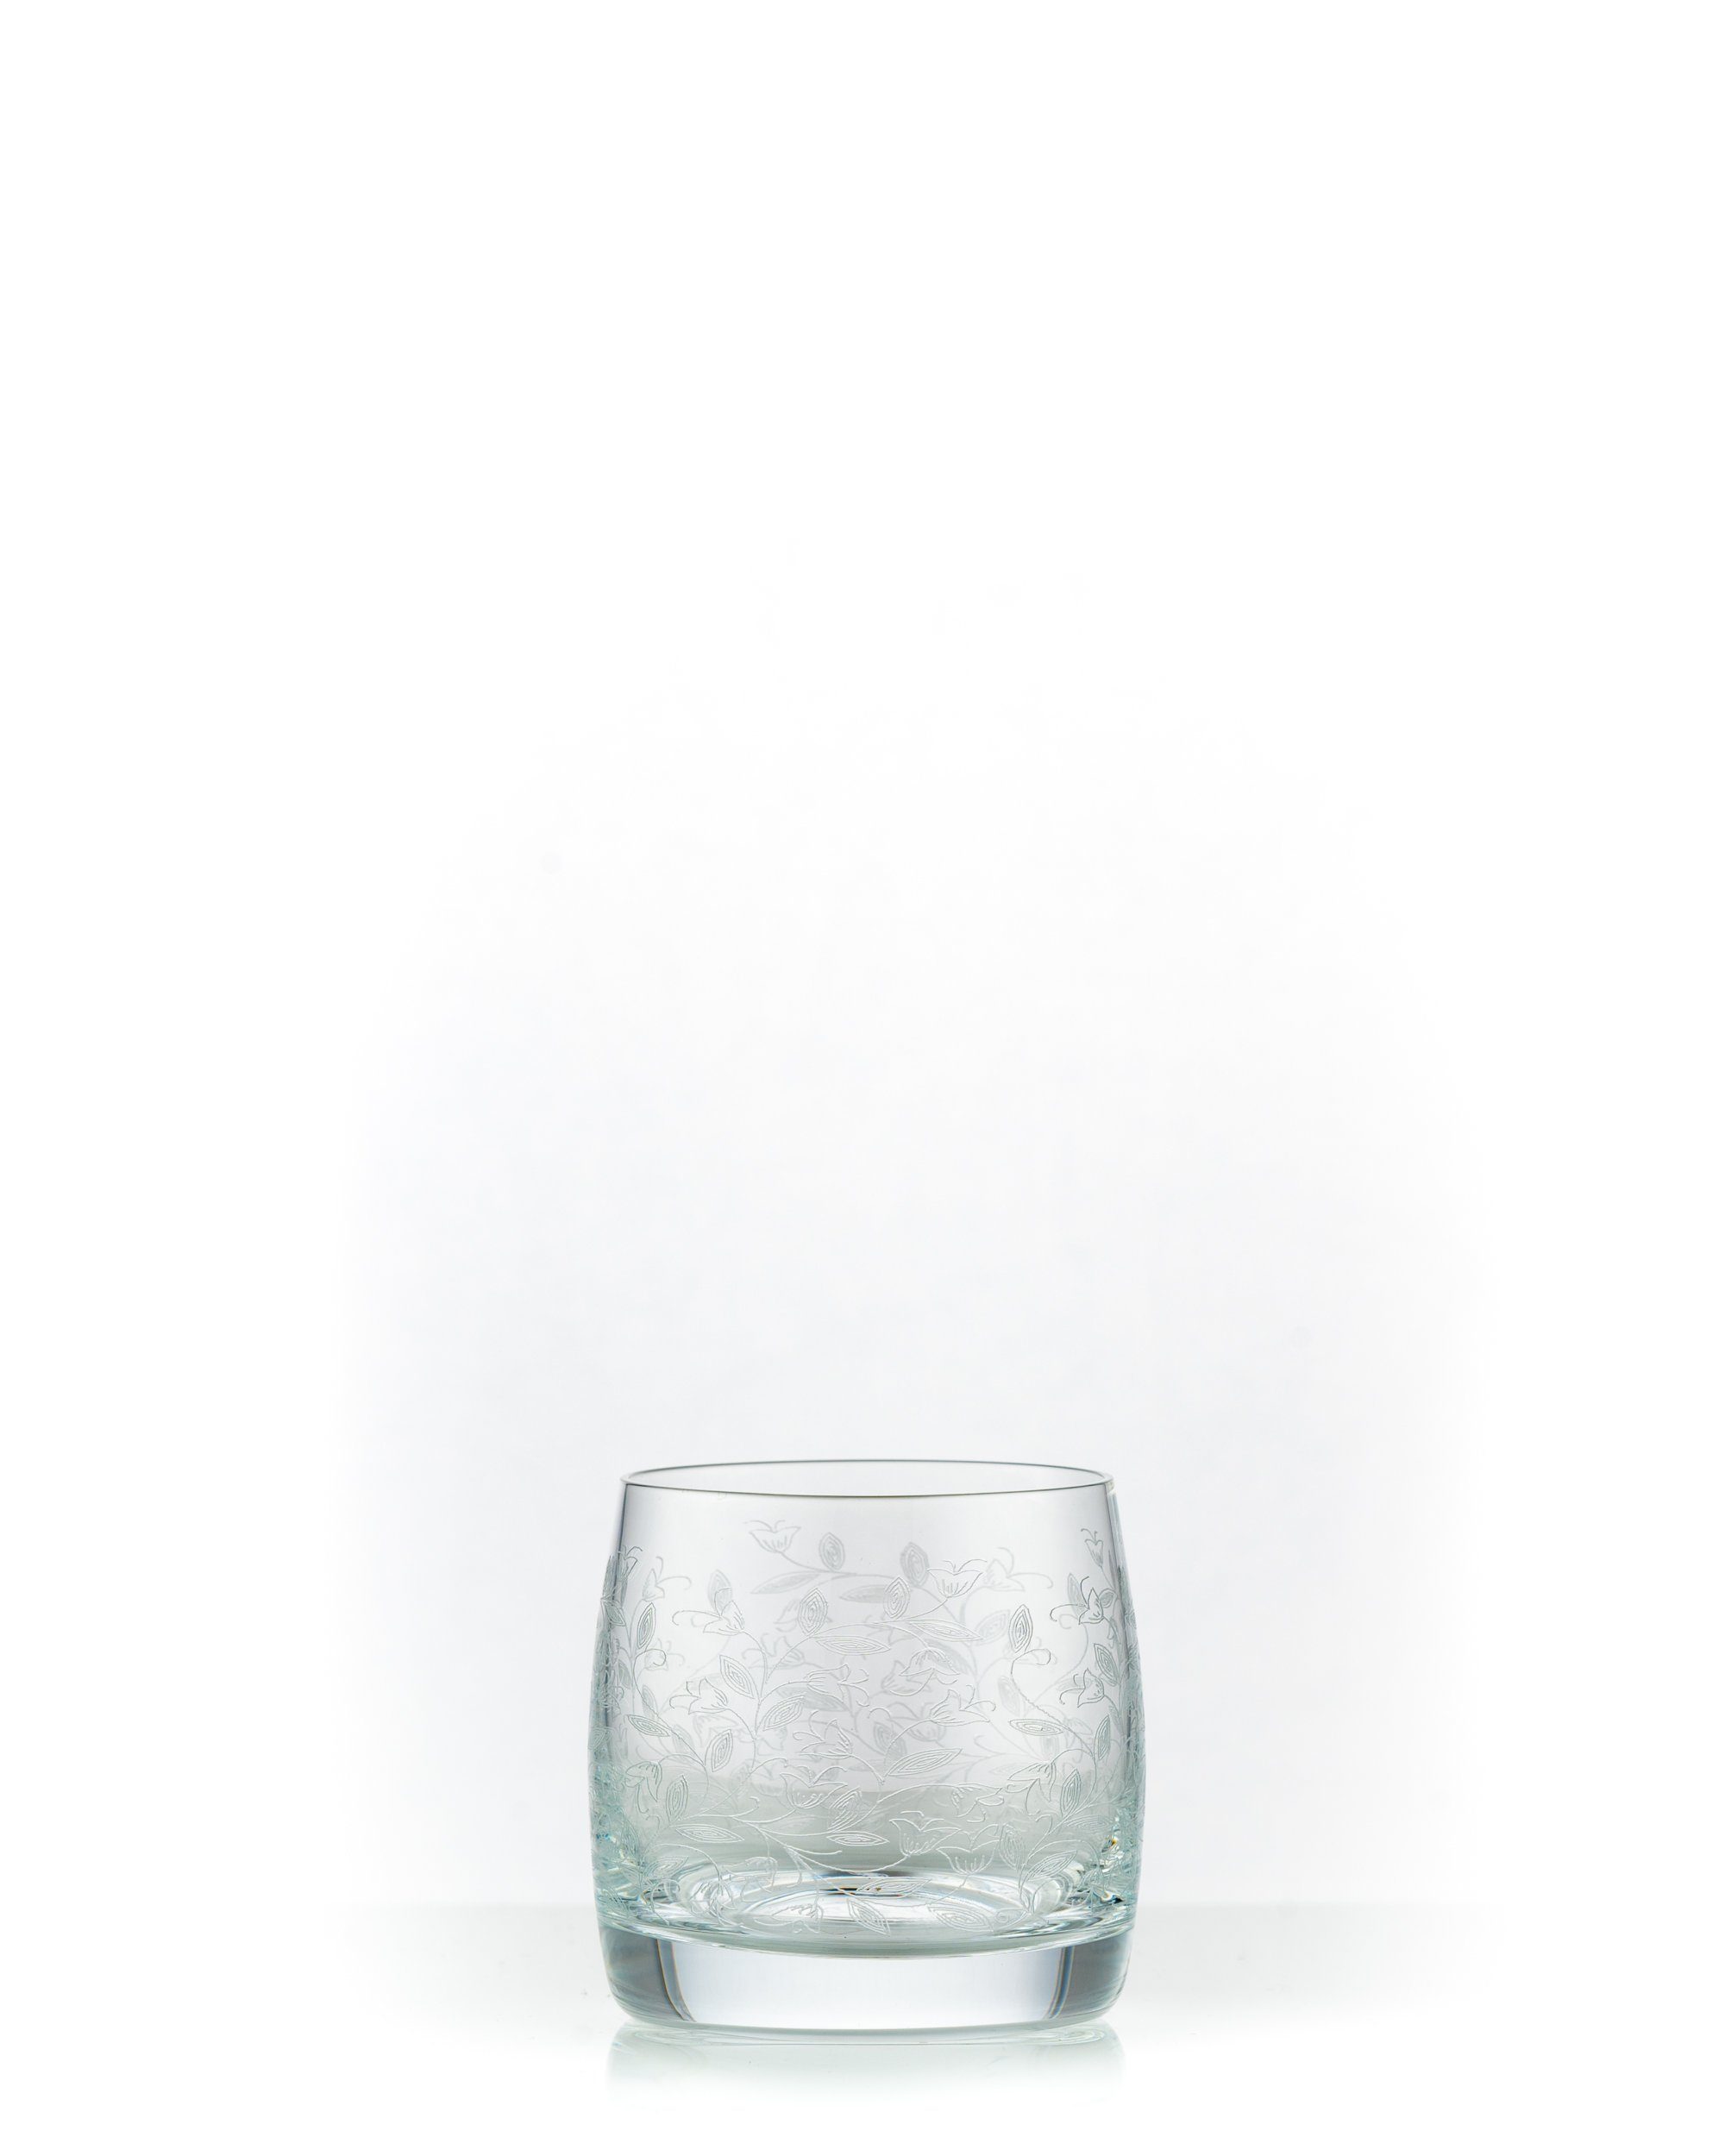 Crystalex Becher Ideal Gravur Wassergläser 230 ml 6er Set, Kristallglas, Pantografie, Ranken Gravur